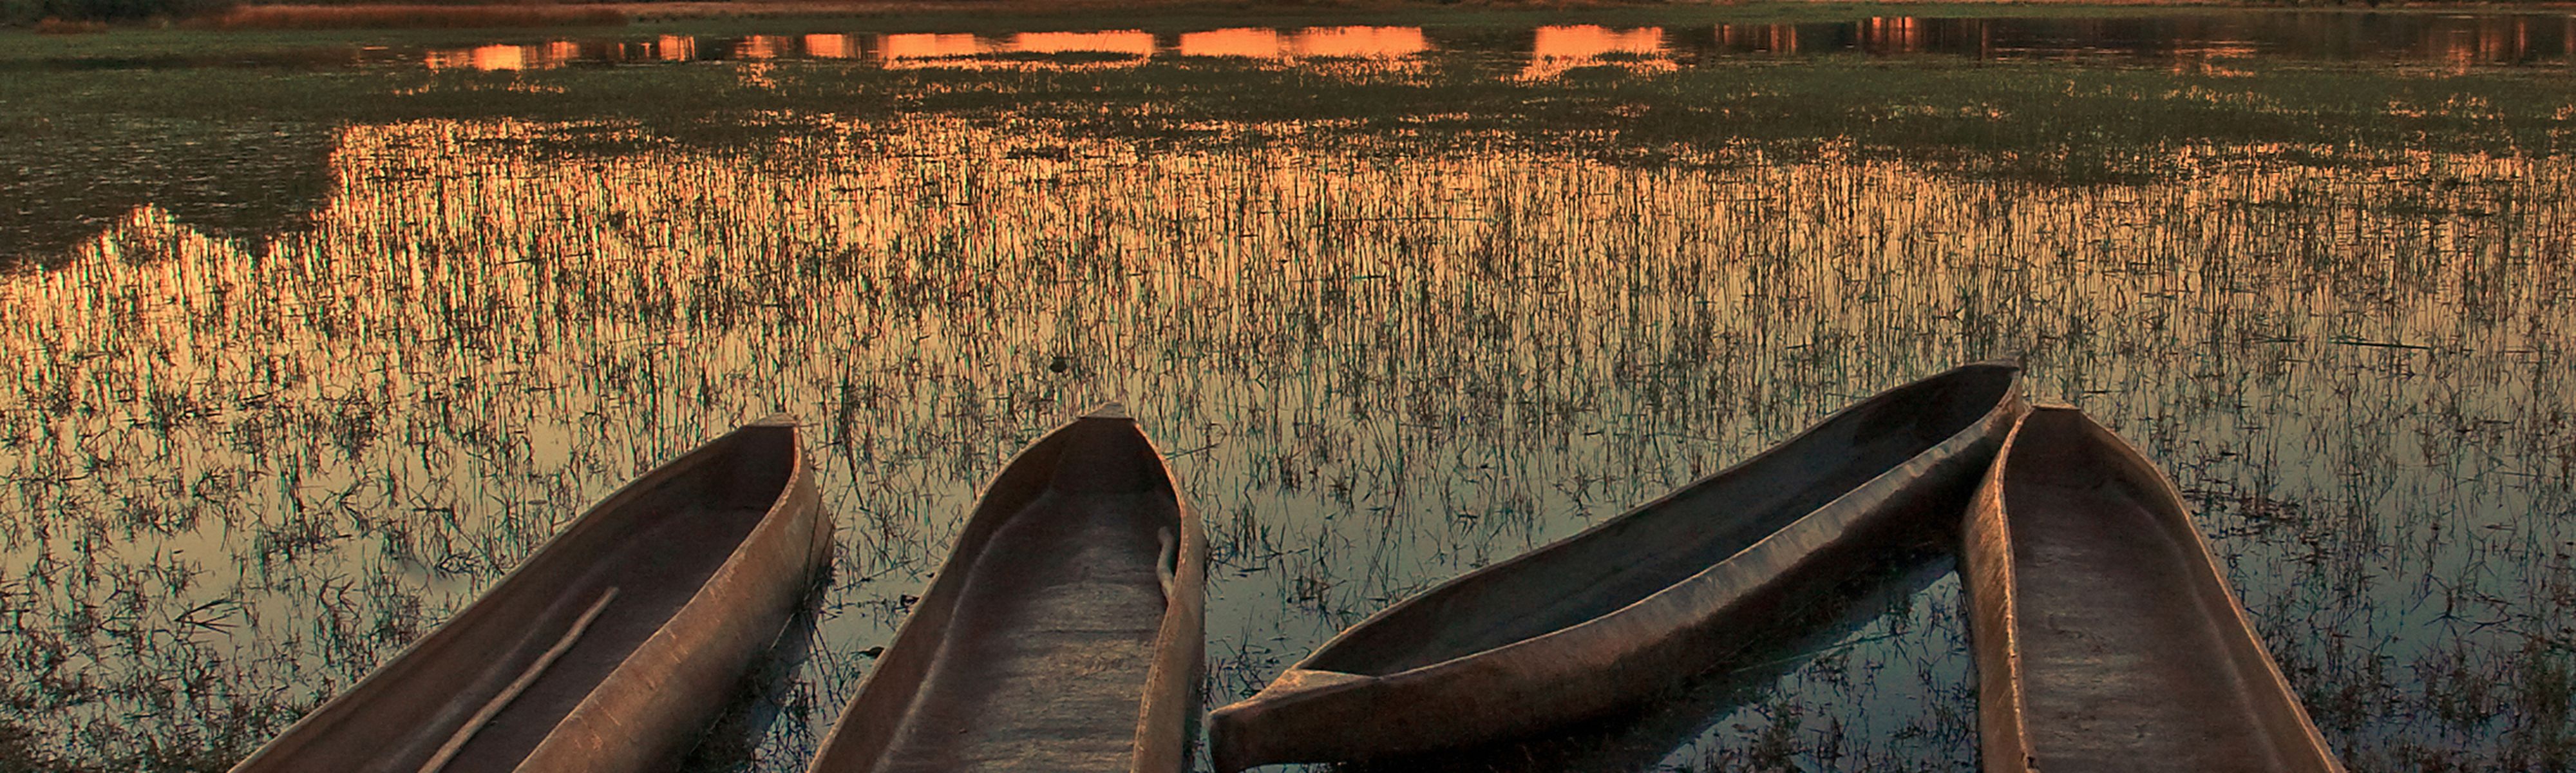 canoes floating in the okavango delta river in botswana at sunset